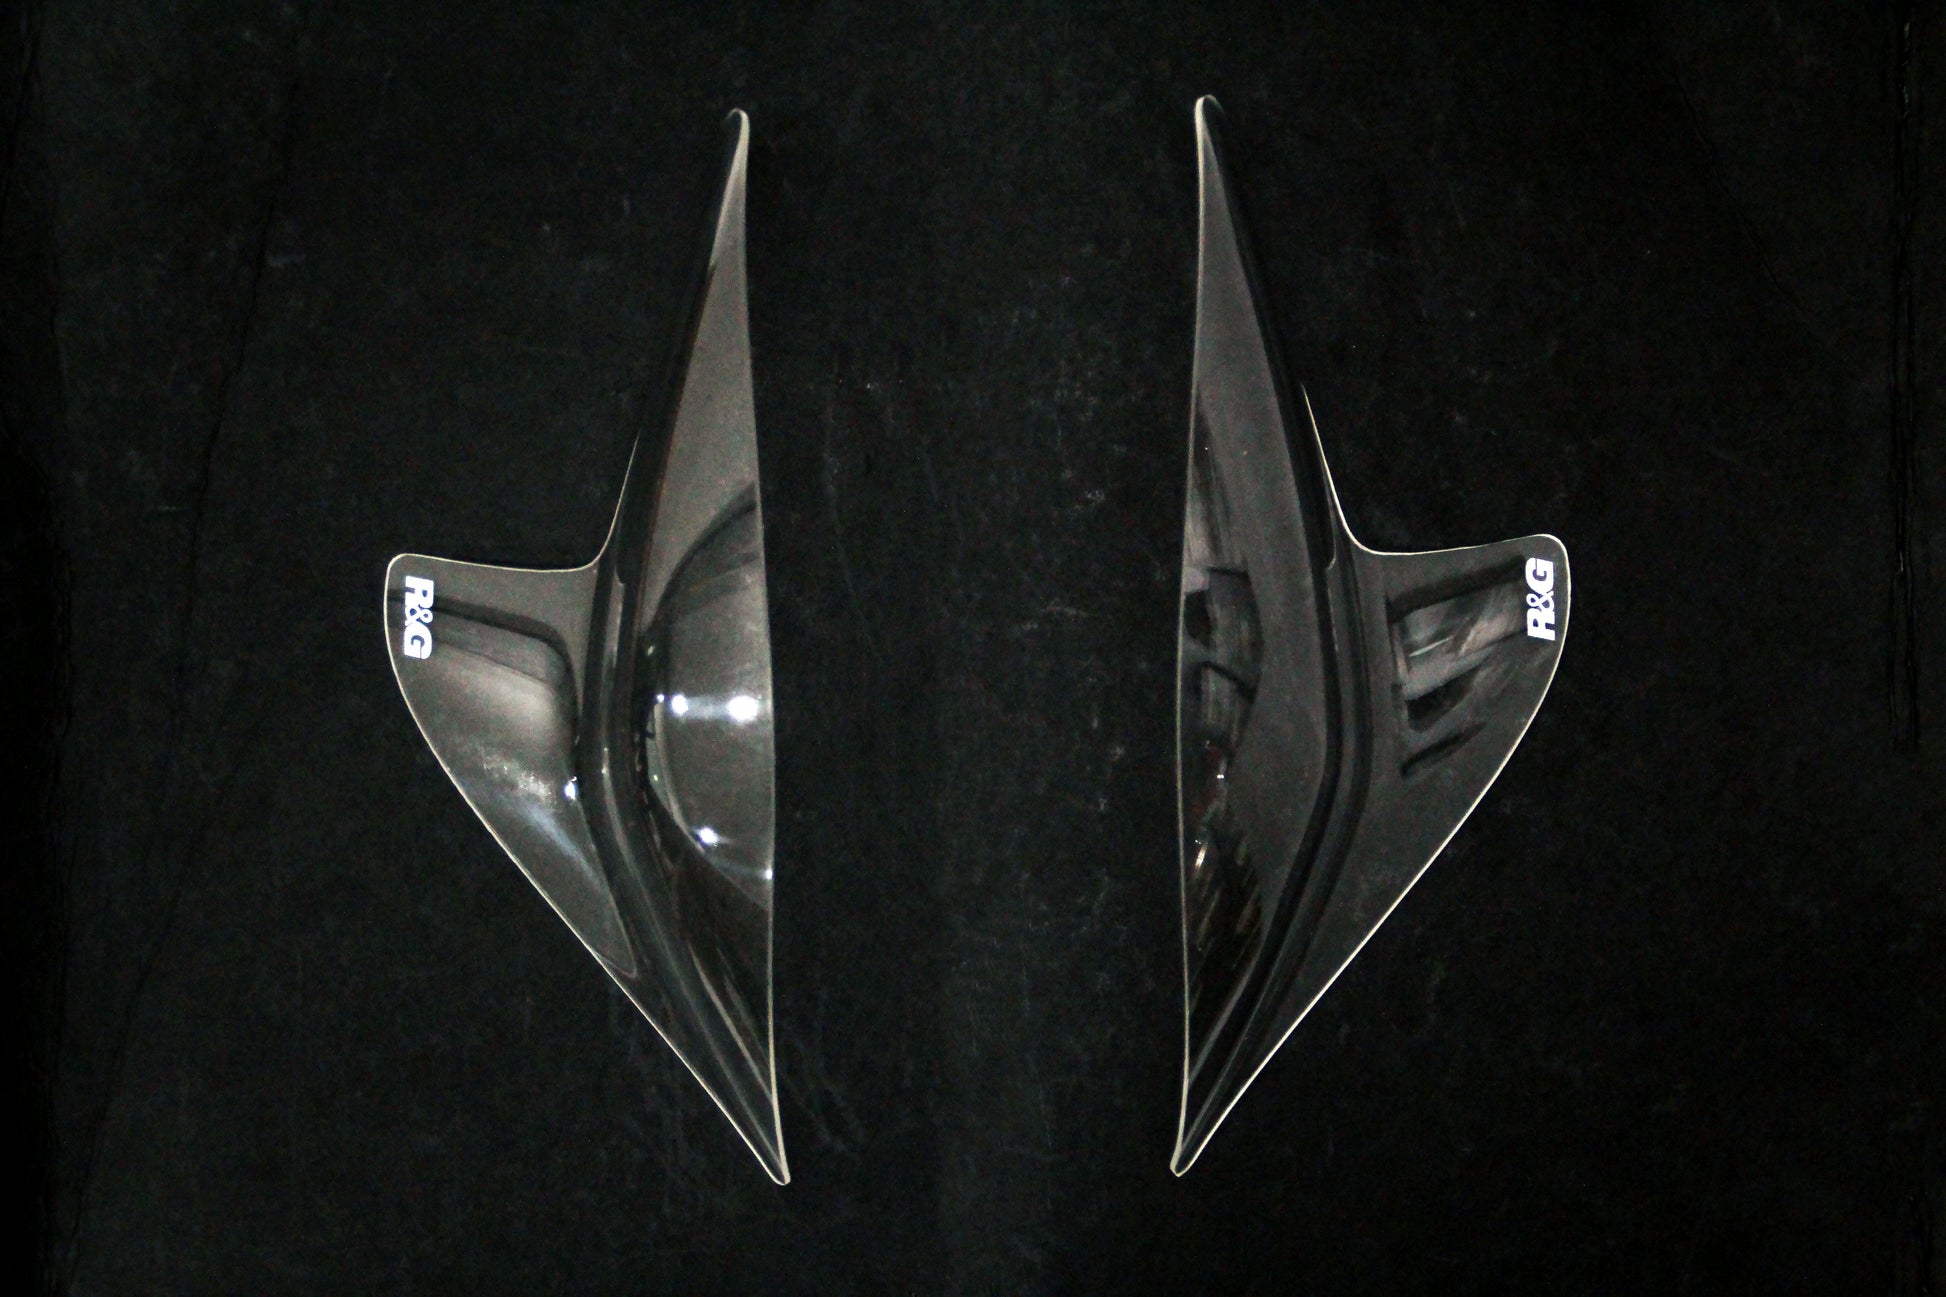 R&G Headlight Shields fits for Yamaha T-Max 530 ('17-) & Yamaha TMAX 560 ('20-) - Durian Bikers